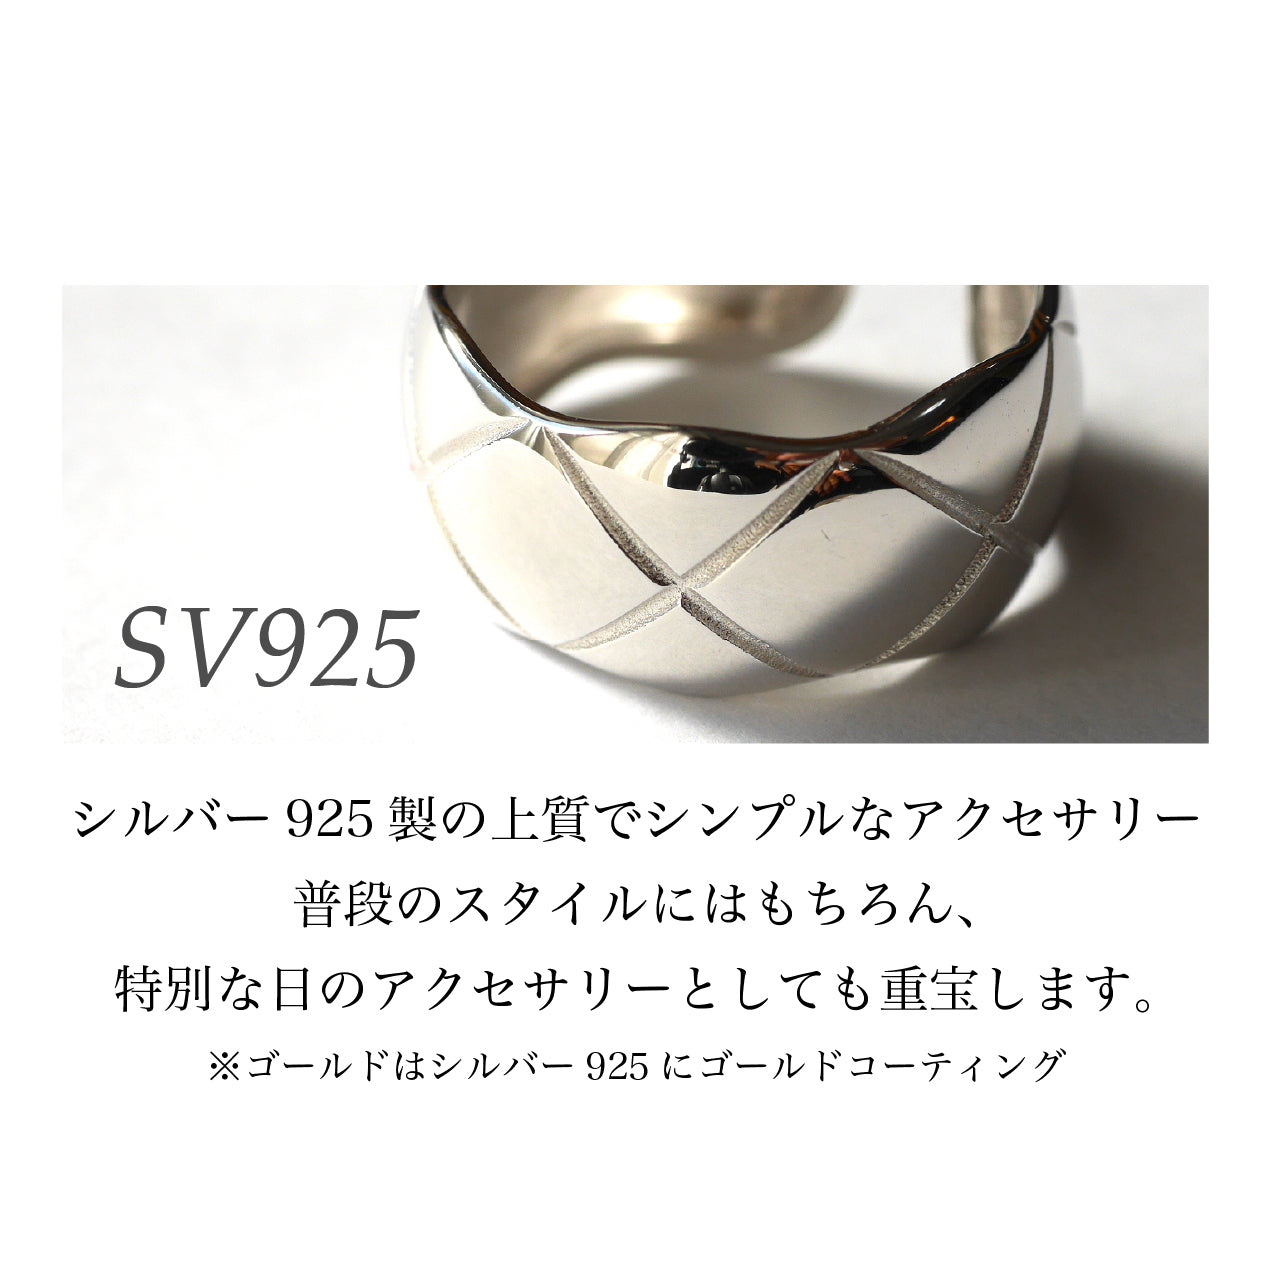 【La Closet】キルティングデザインリング SILVER925製 フリーサイズ シンプル ゴールド シルバーアクセサリー 純銀 リング 指輪 ピンキーリング ファランジリング ミディリング